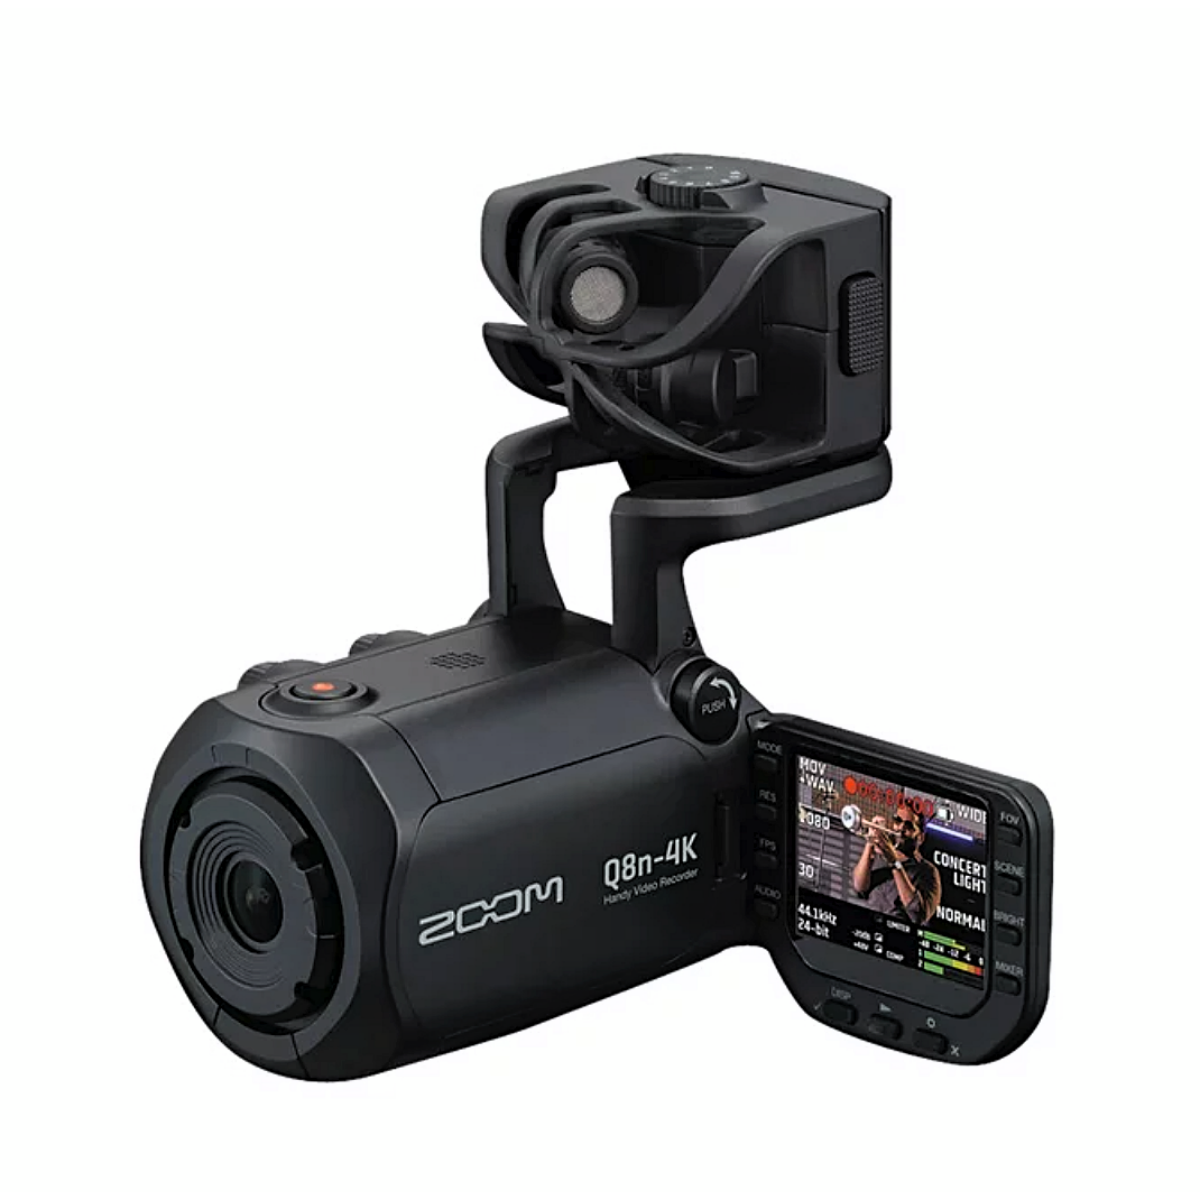 A Zoom Q8n-4K camcorder